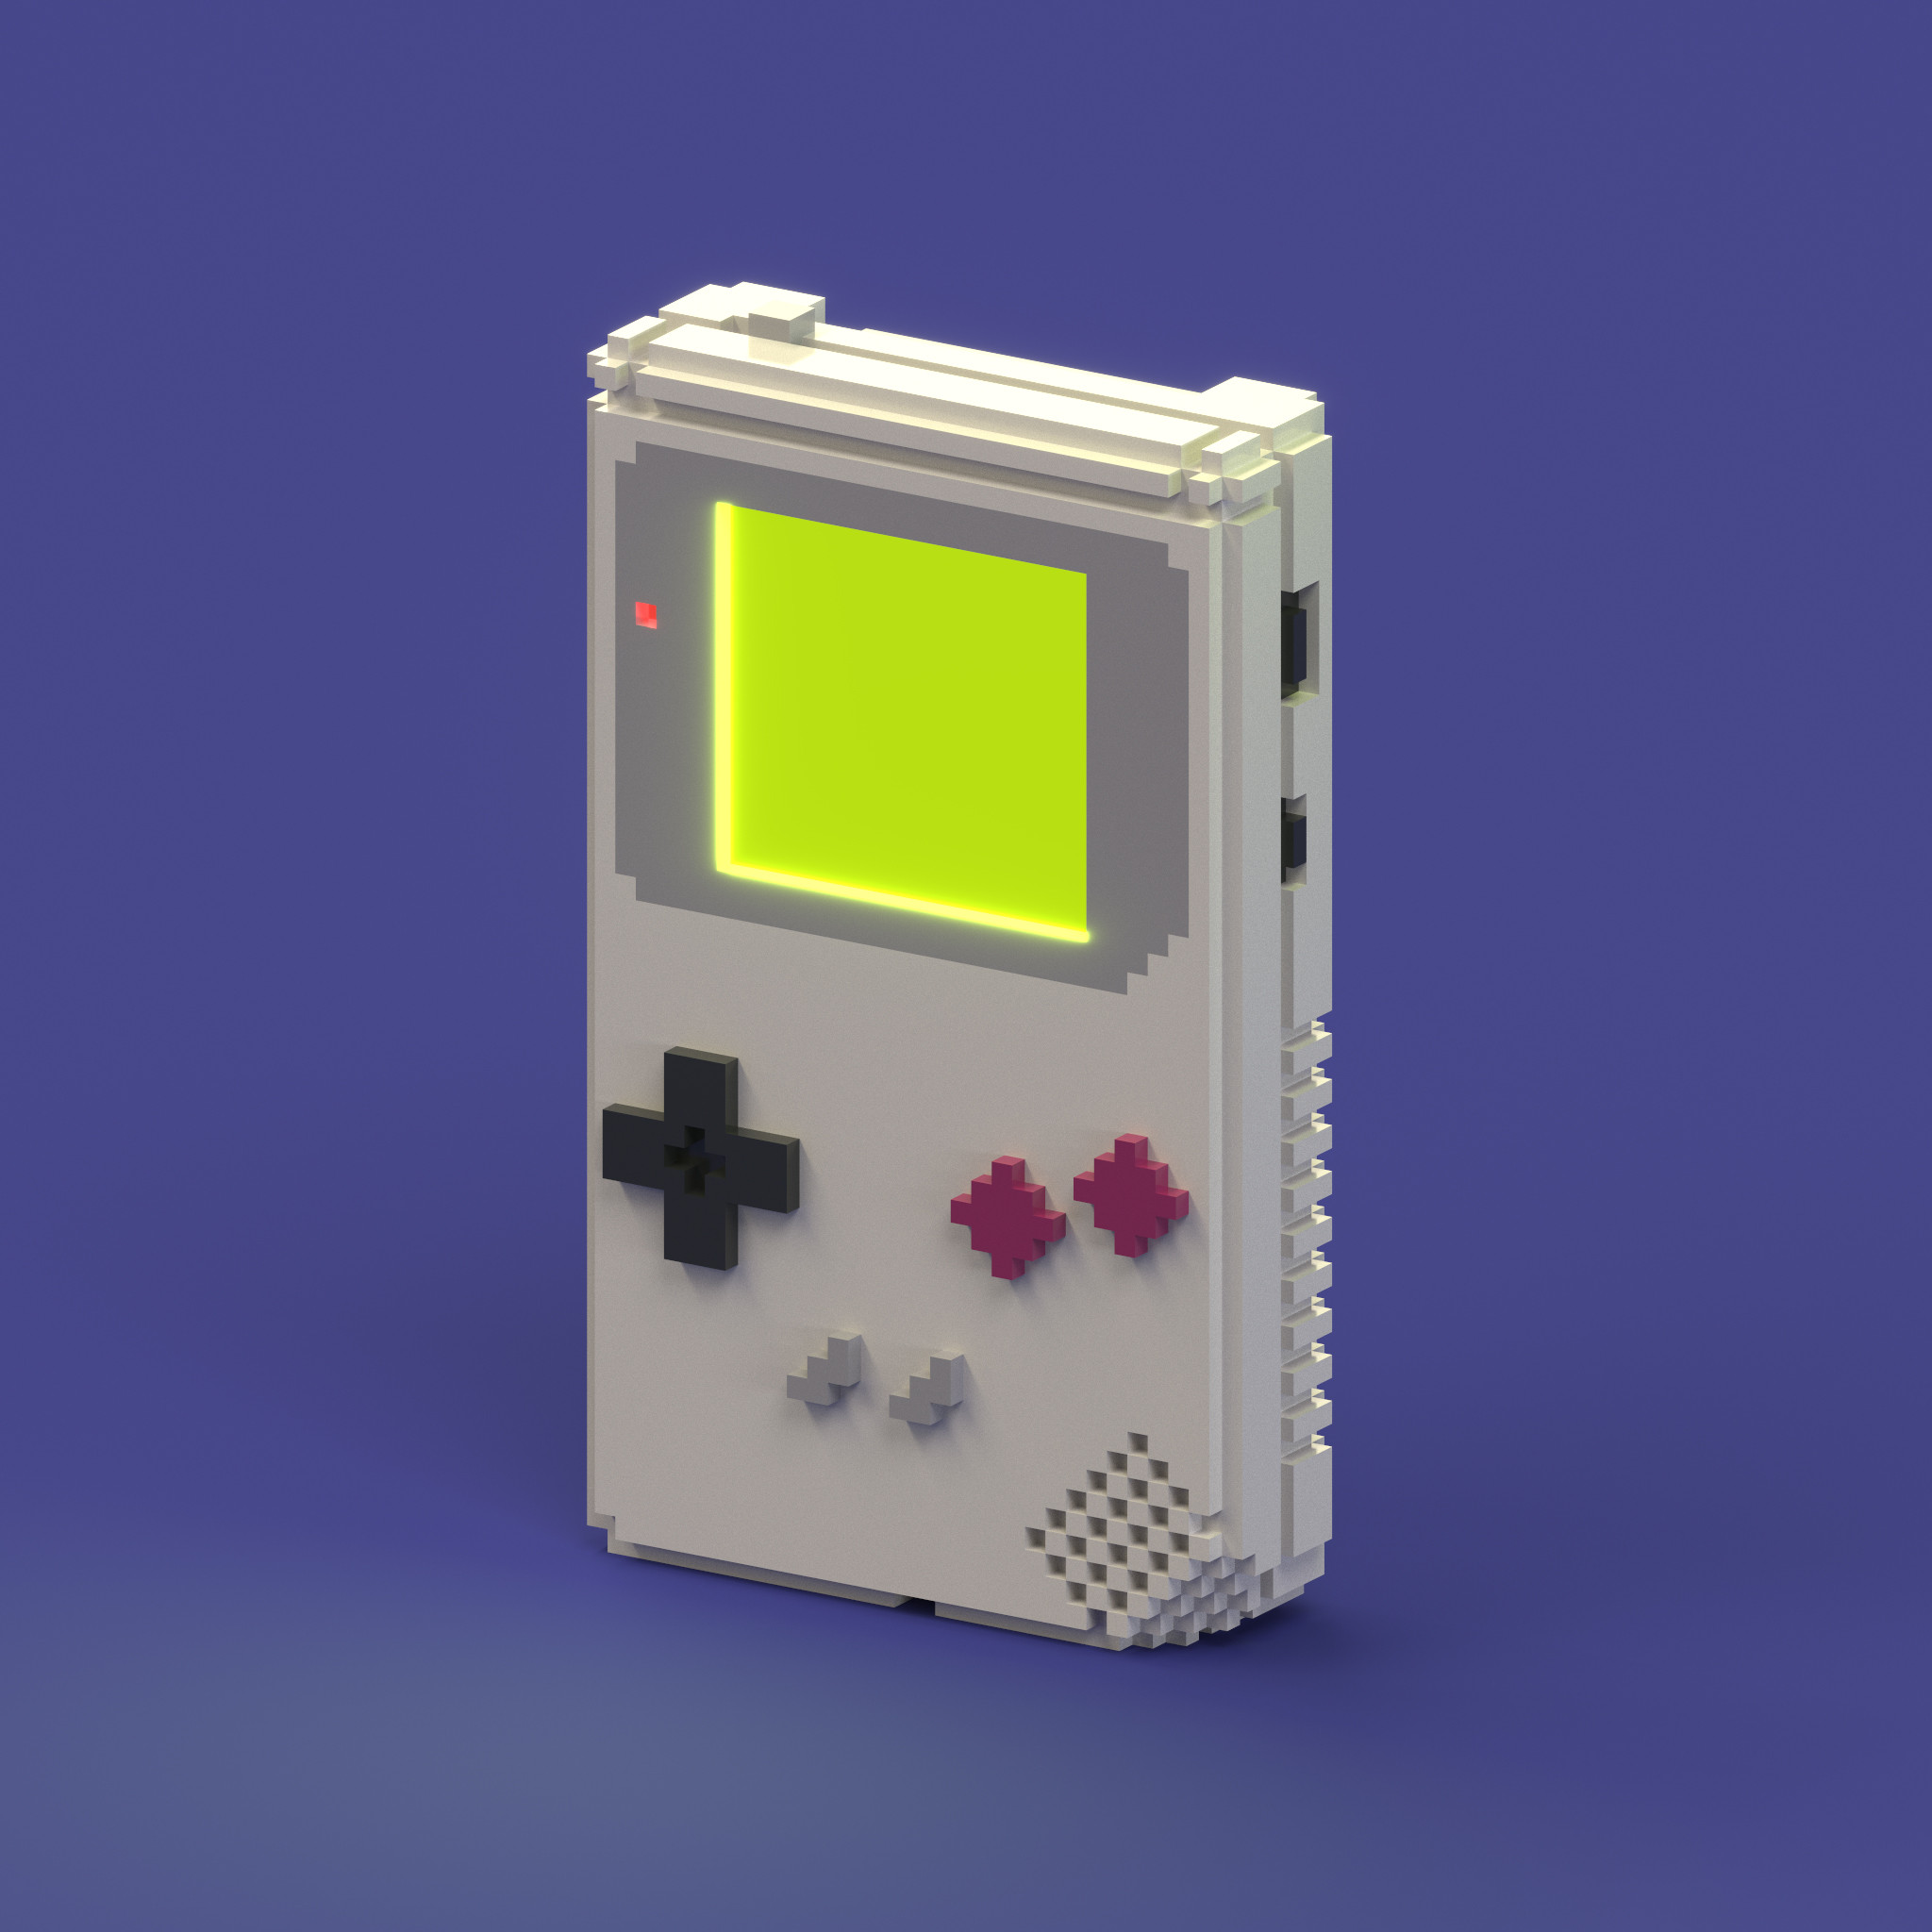 Voxel model rendering of the Nintendo Game Boy.